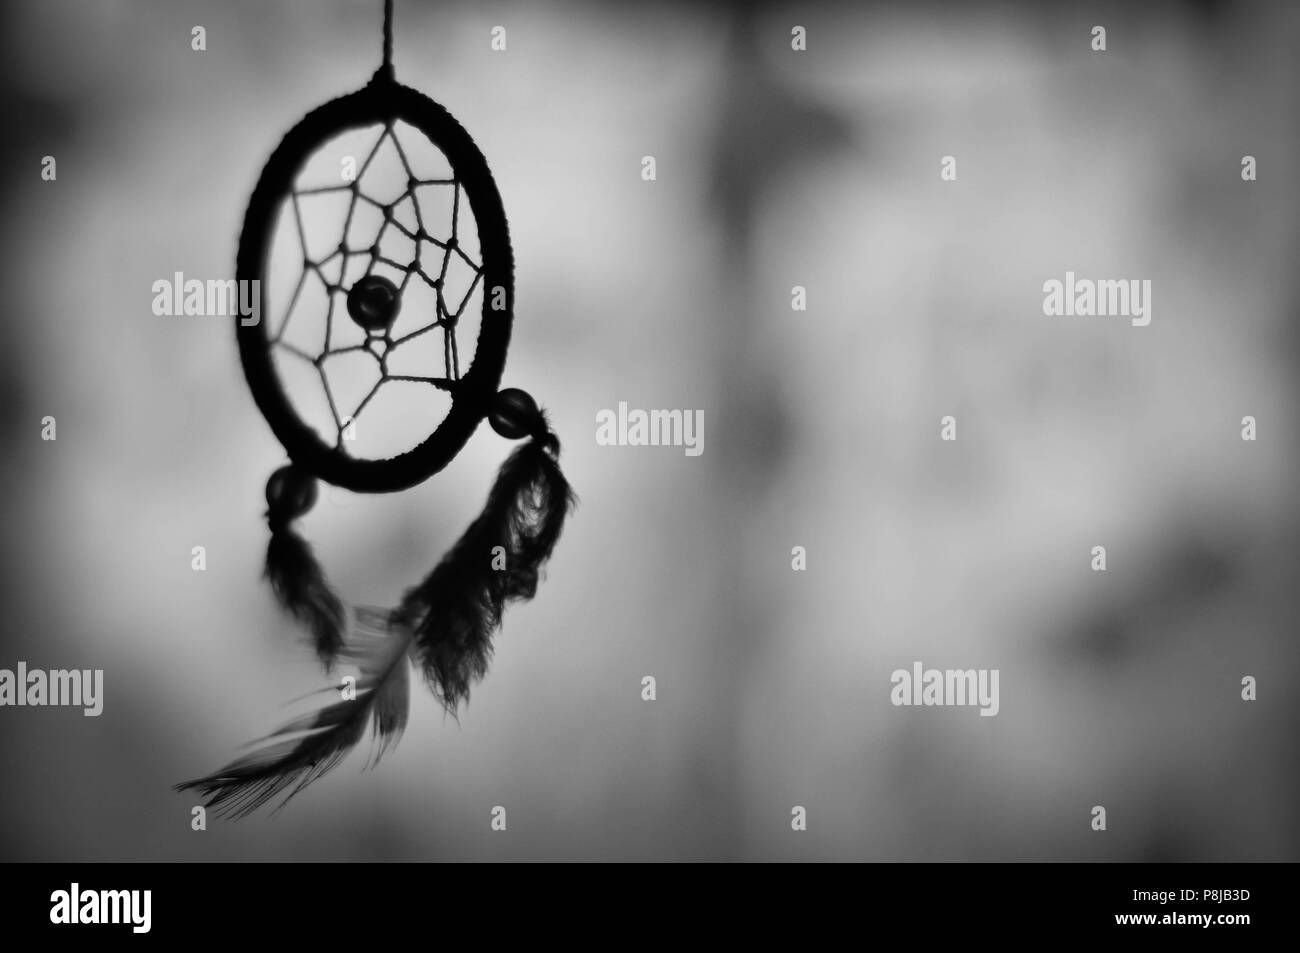 handmade dreamcatcher black and white, blurred background Stock Photo